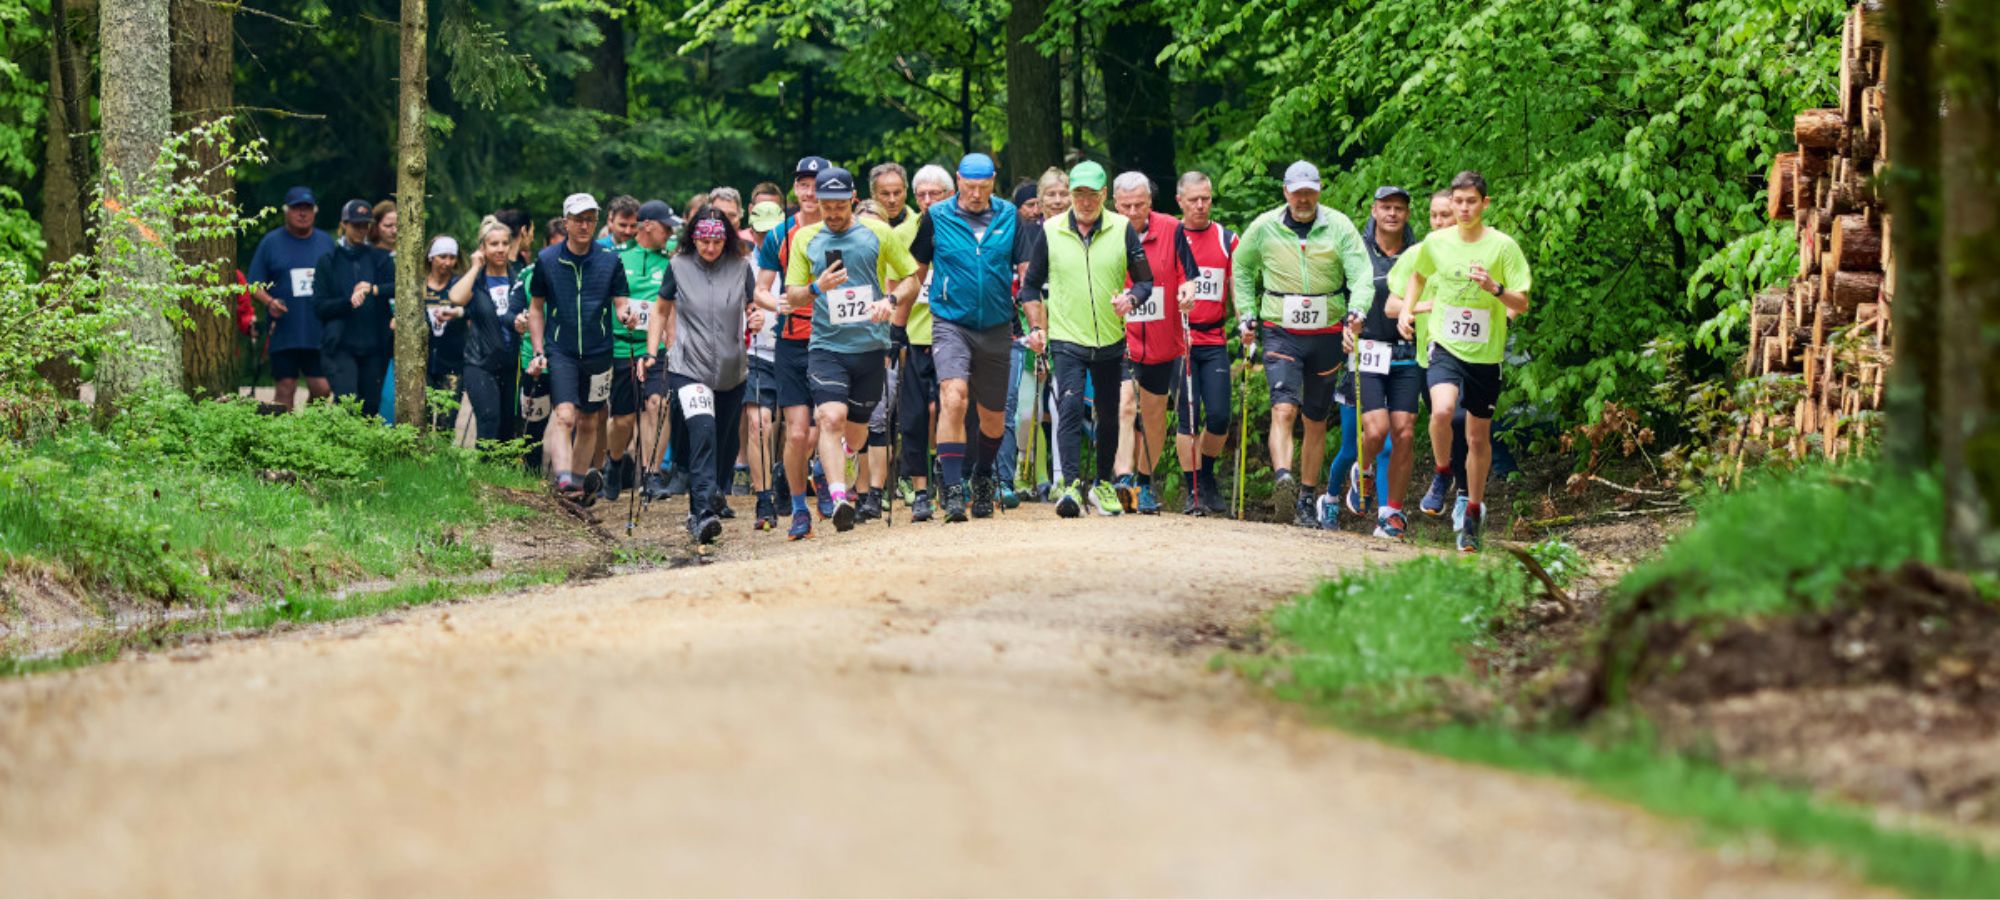 Teilnehmer des Rottaler Nordic Walking Marathons in Bad Griesbach